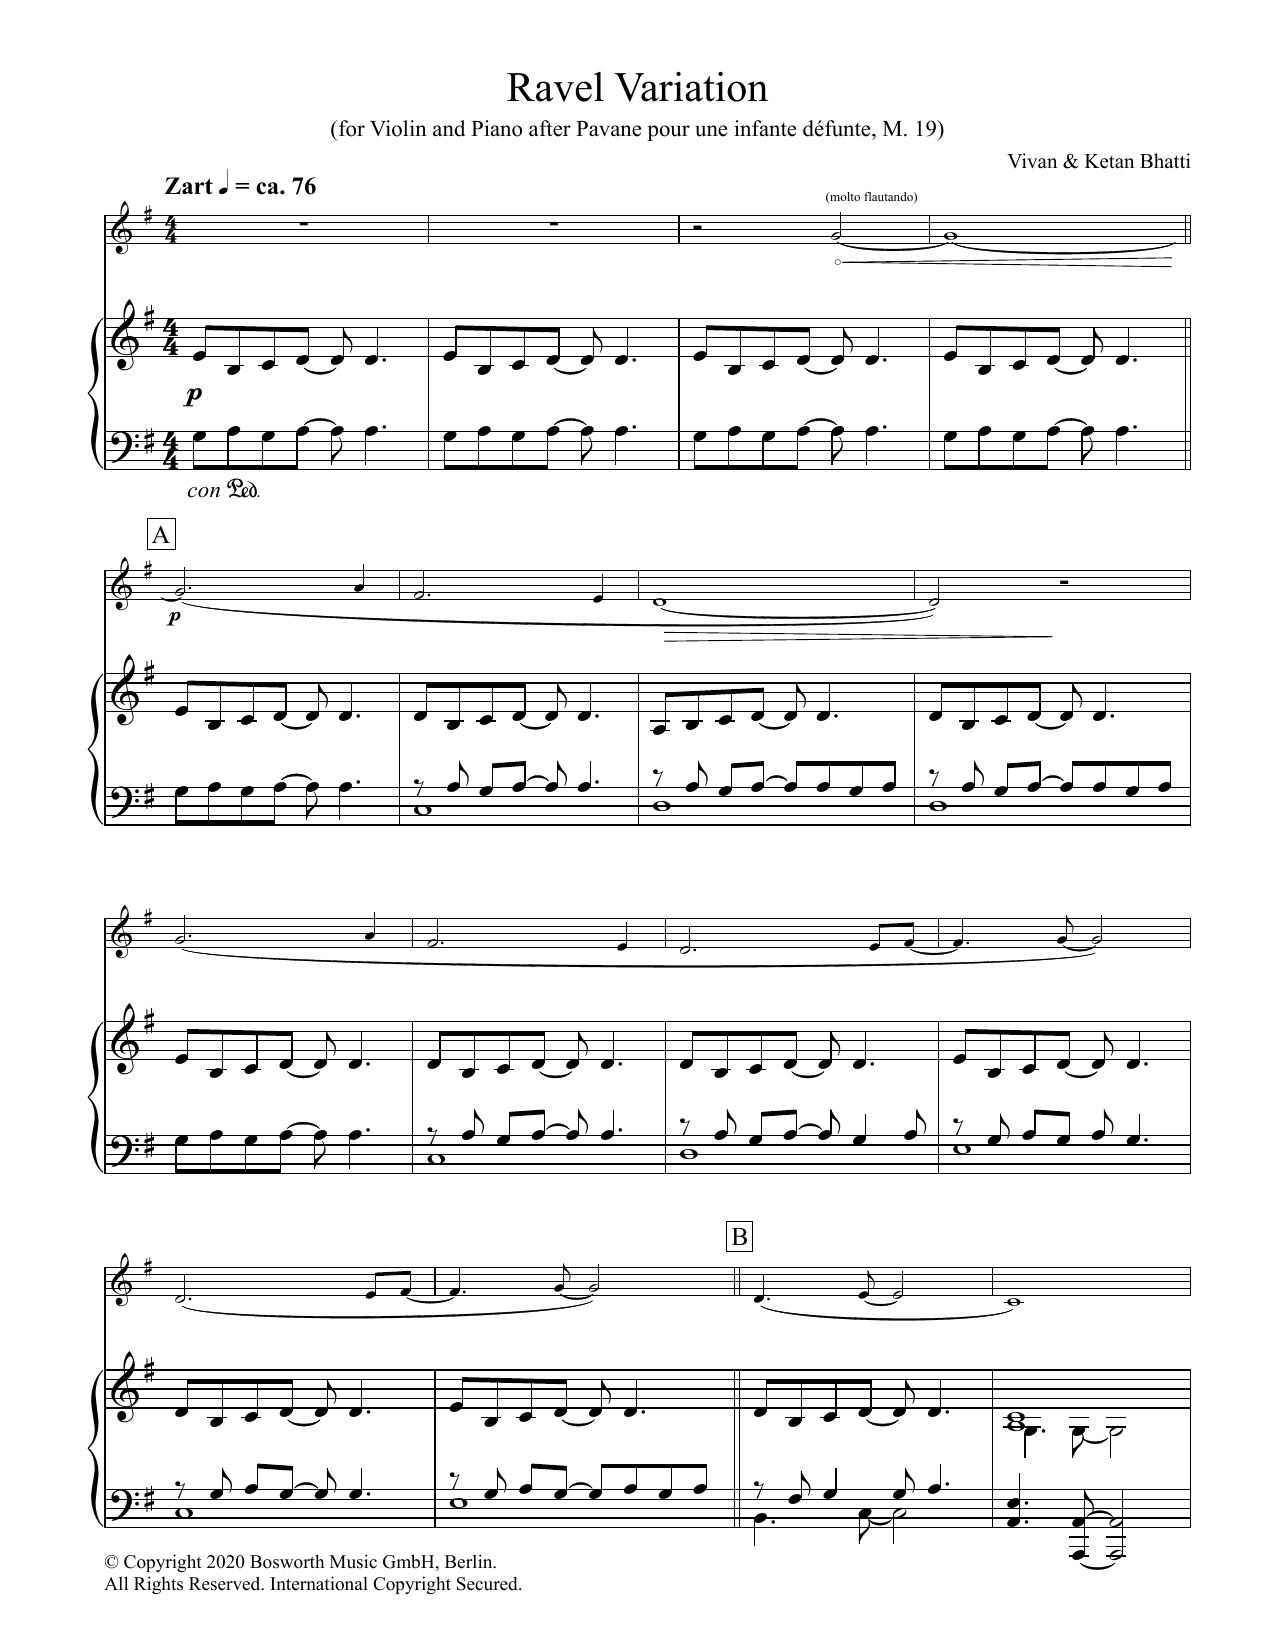 Ketan & Vivan Bhatti Ravel Variation sheet music notes and chords arranged for Violin and Piano